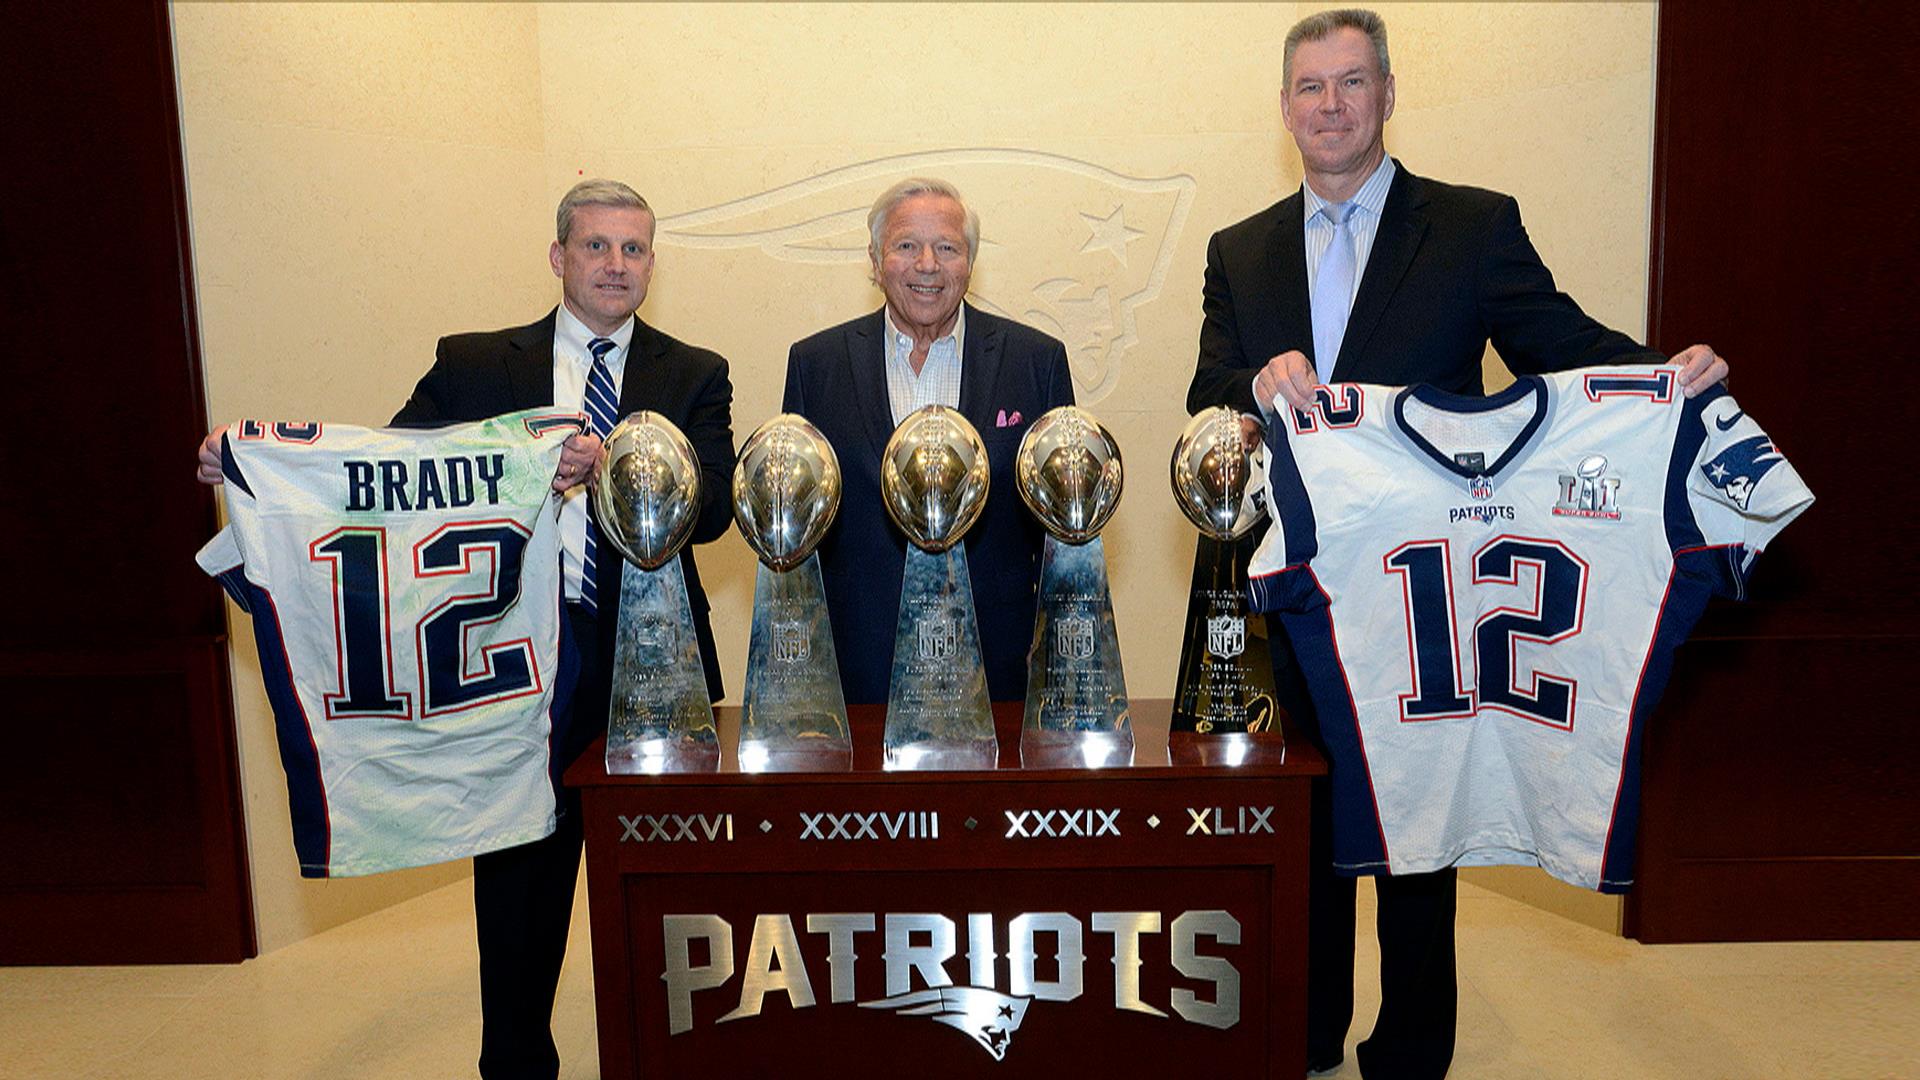 Tom Brady's Super Bowl jerseys are safely returned at last